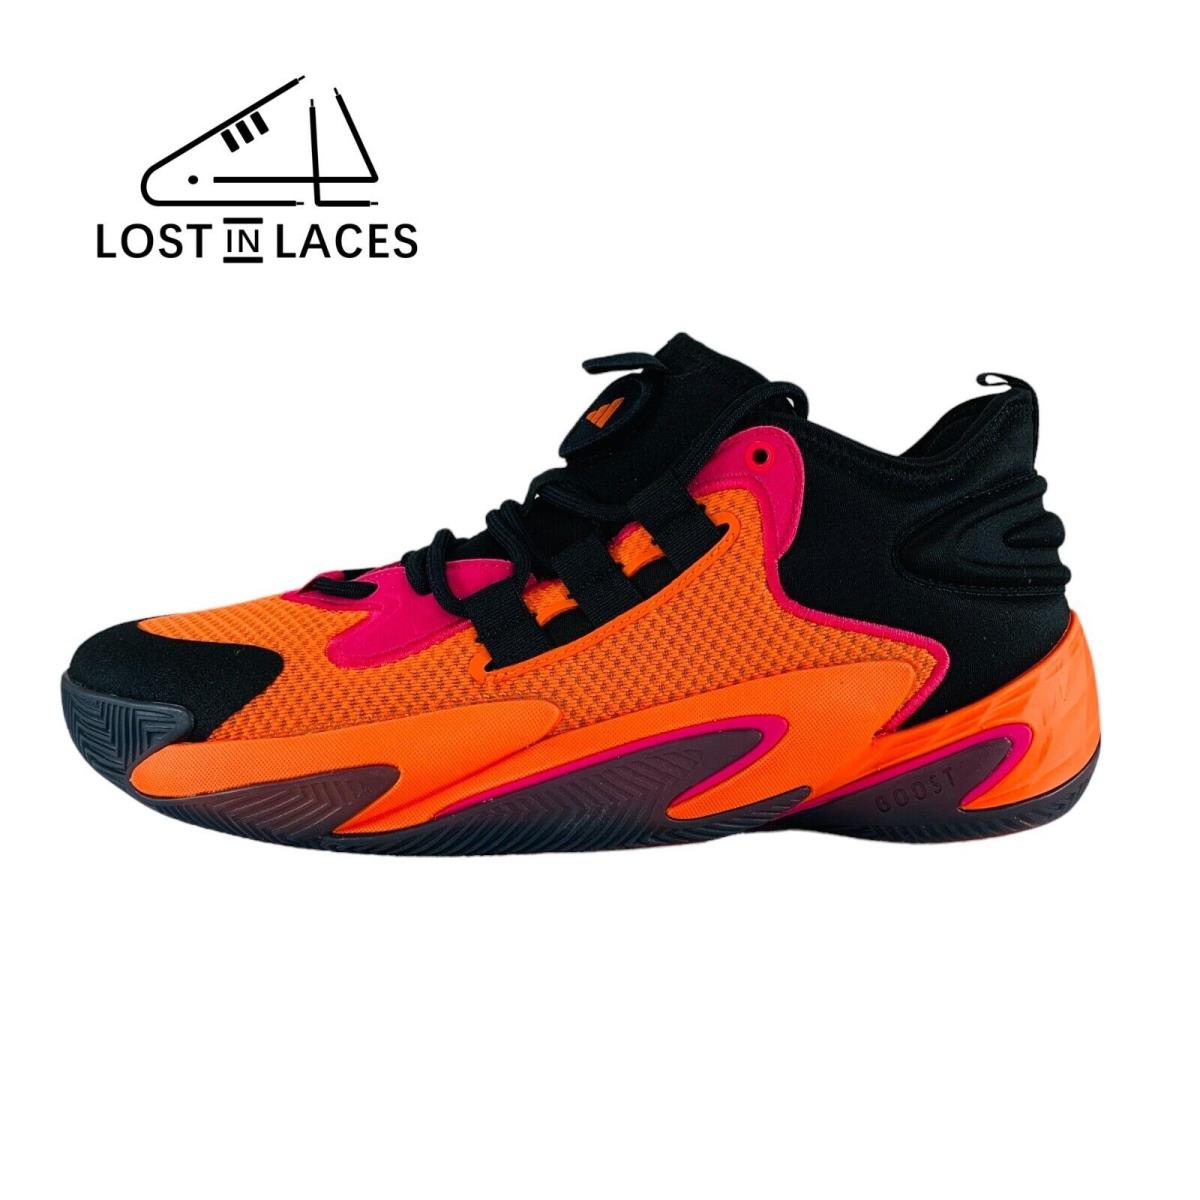 Adidas Byw Select Orange Black Sneakers Basketball Shoes Men`s Sizes - Orange